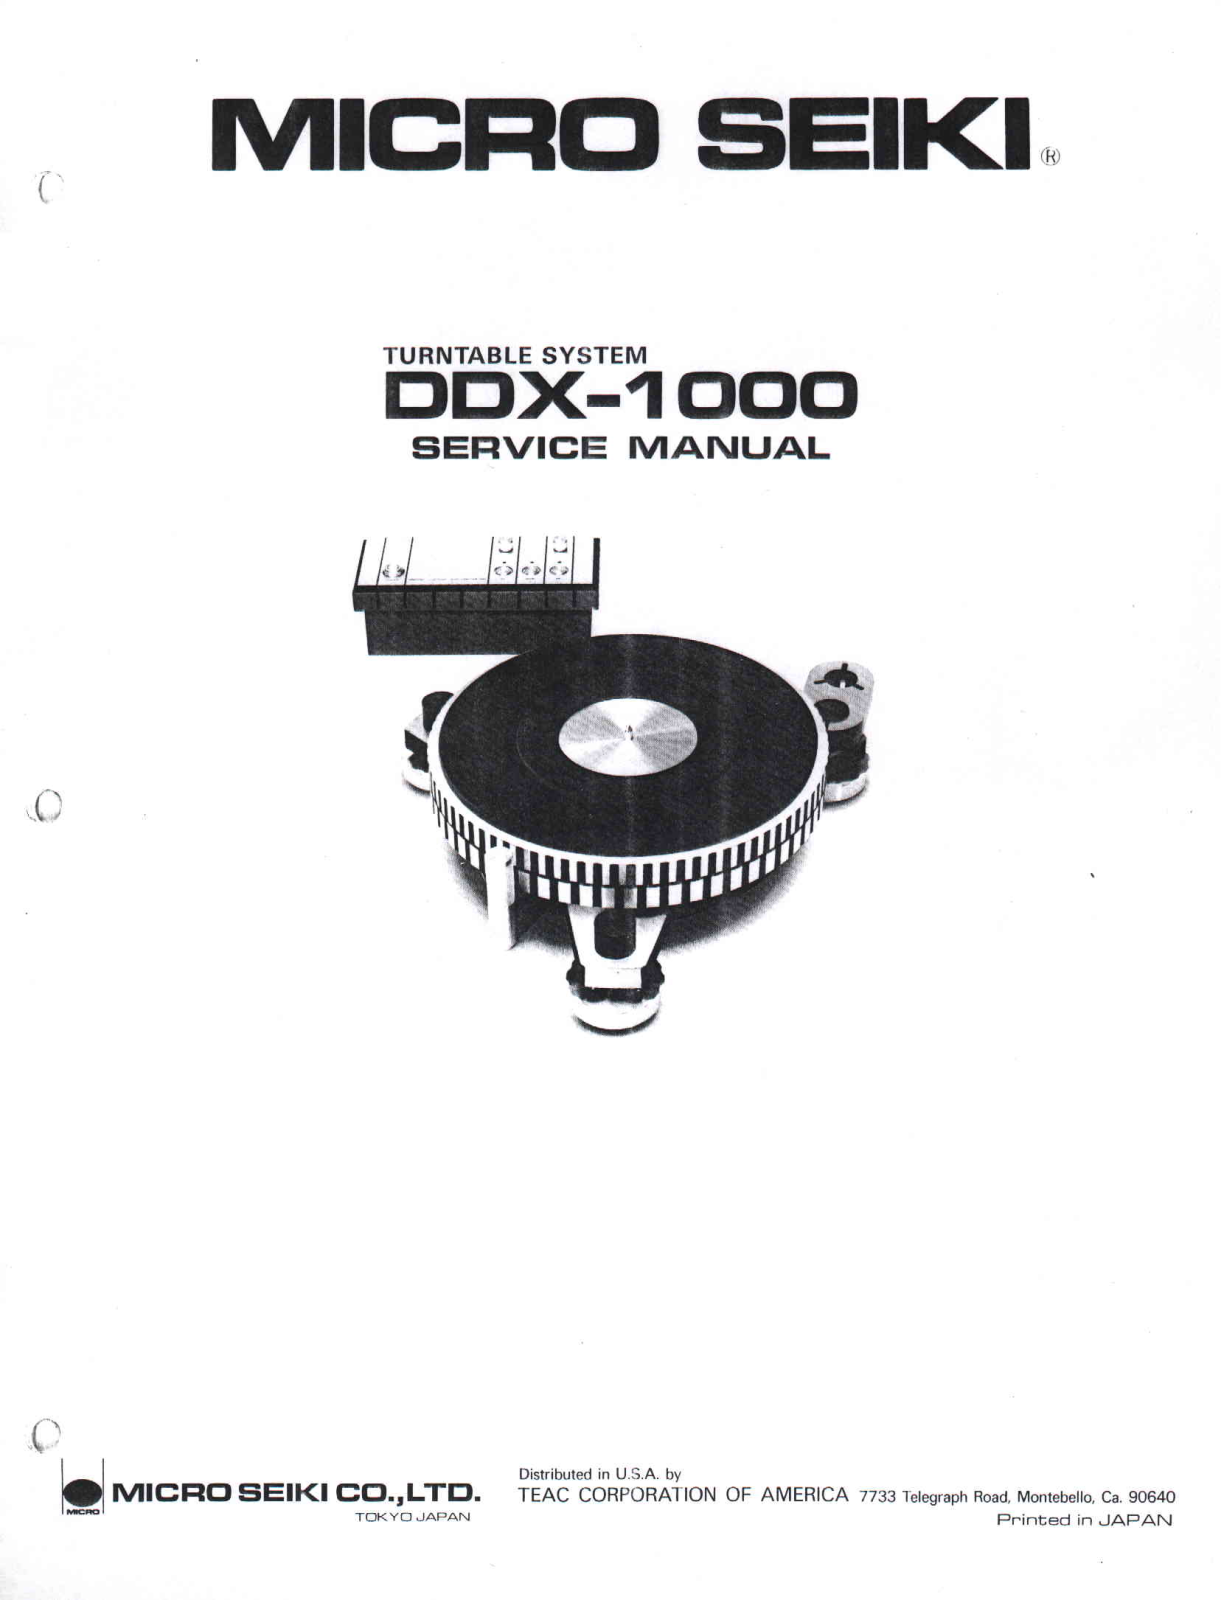 Micro Seiki DDX-1000 Service manual